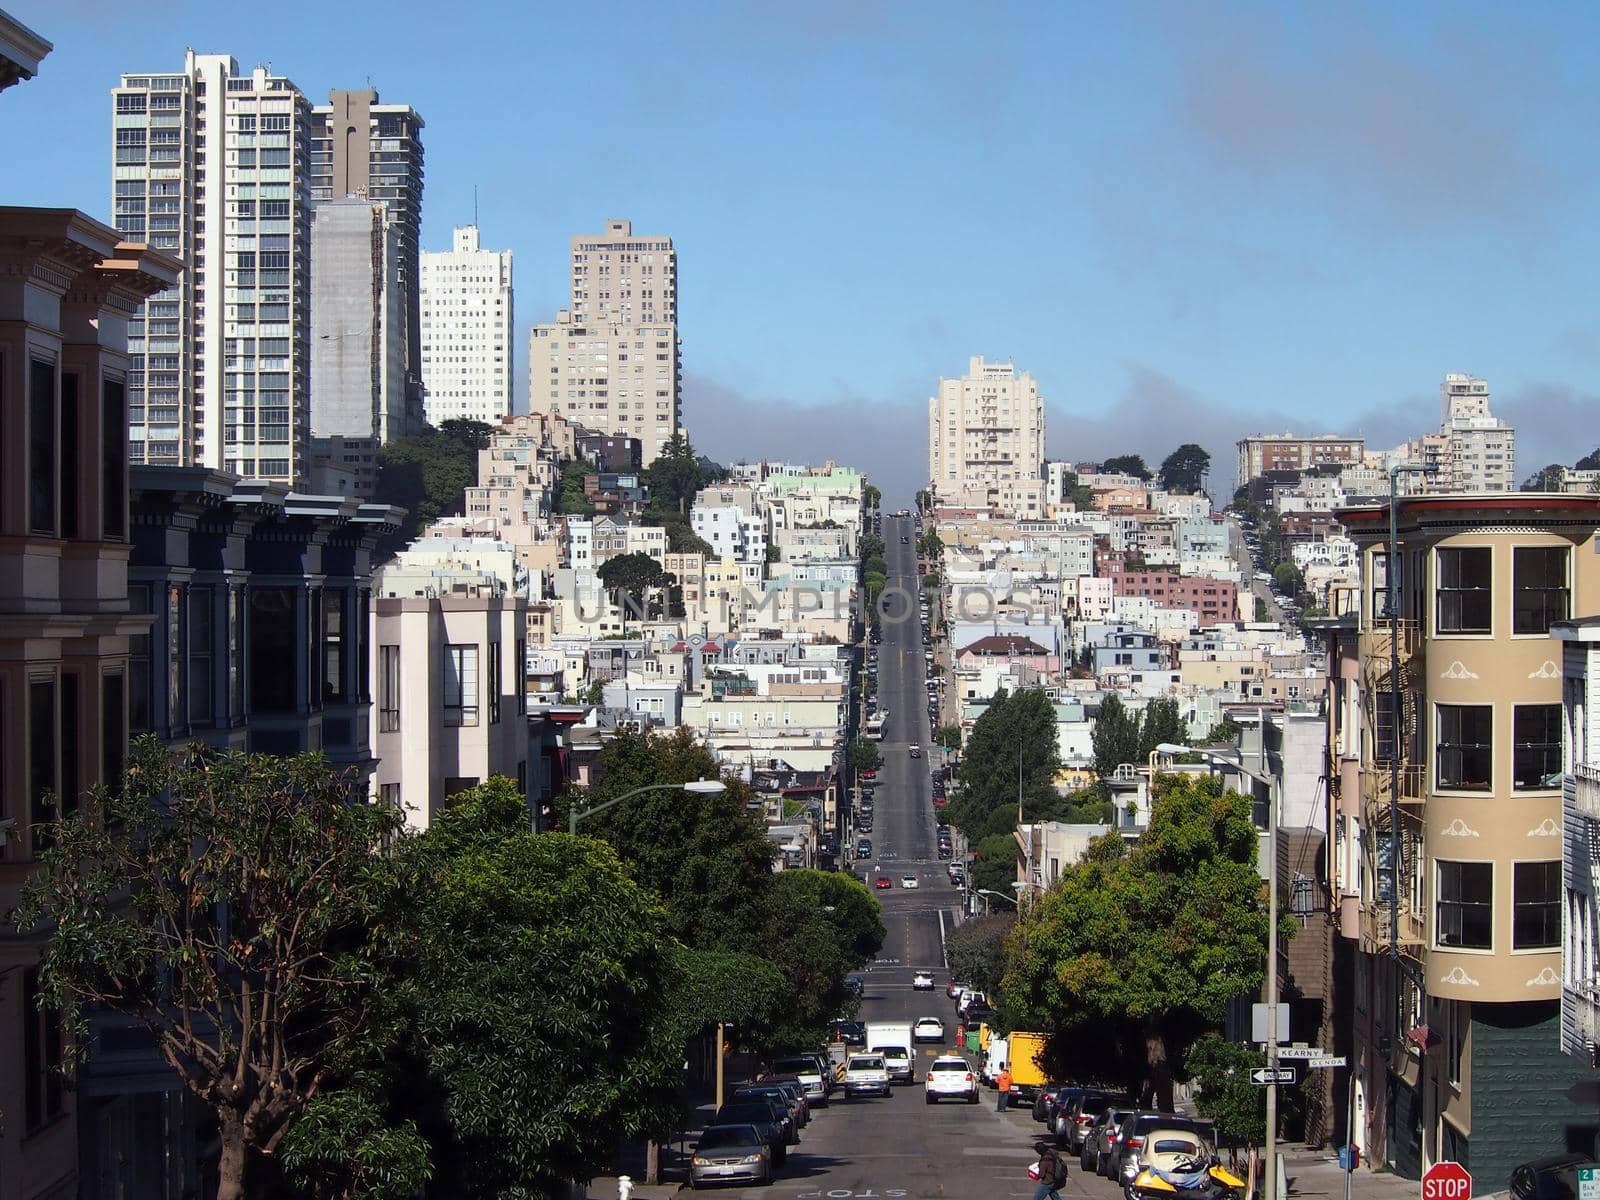 San Francisco street view by EricGBVD